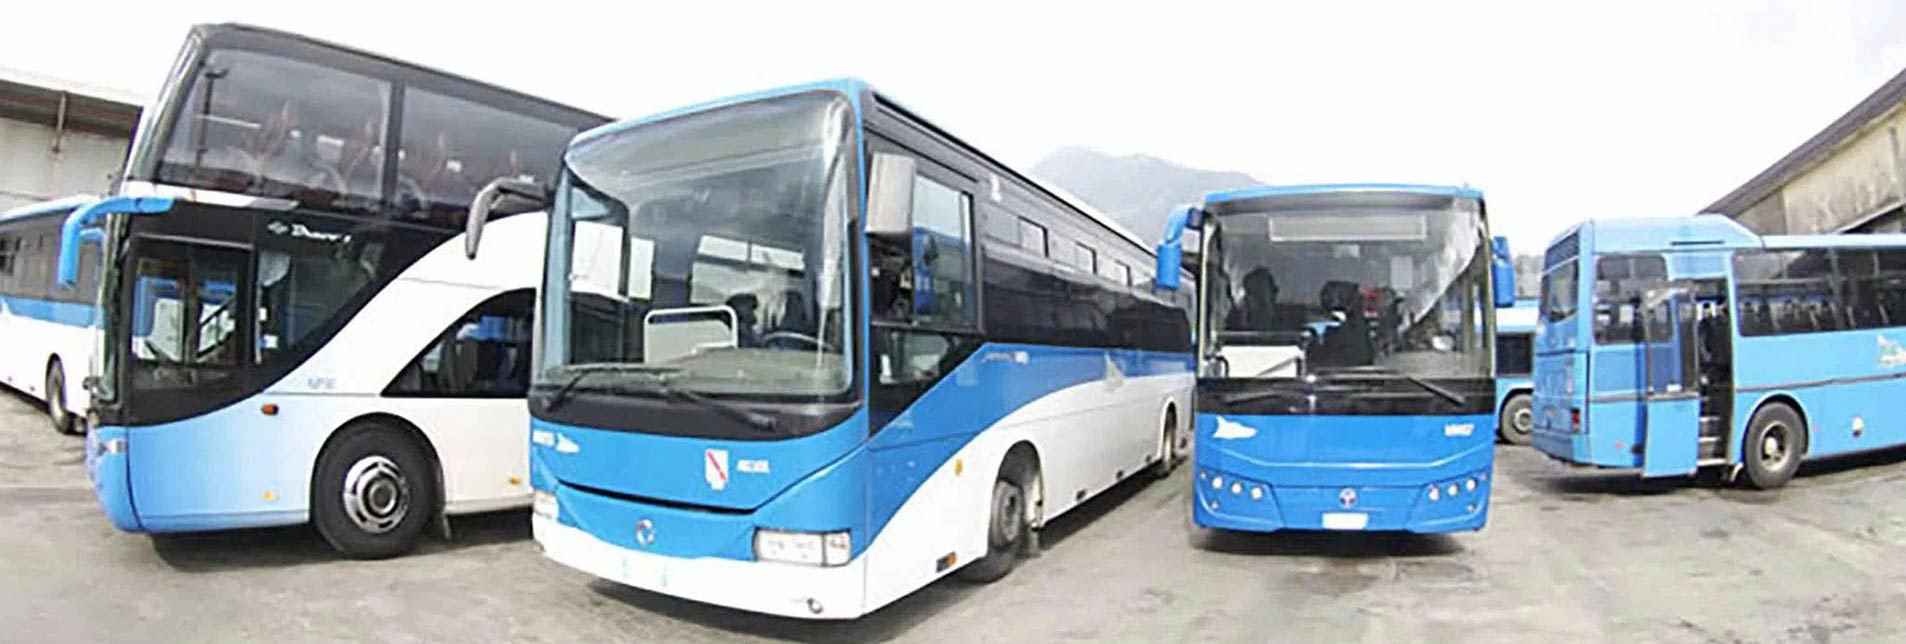 Avellino: AIR, indetta gara per 115 bus, investimento da 7 milioni€